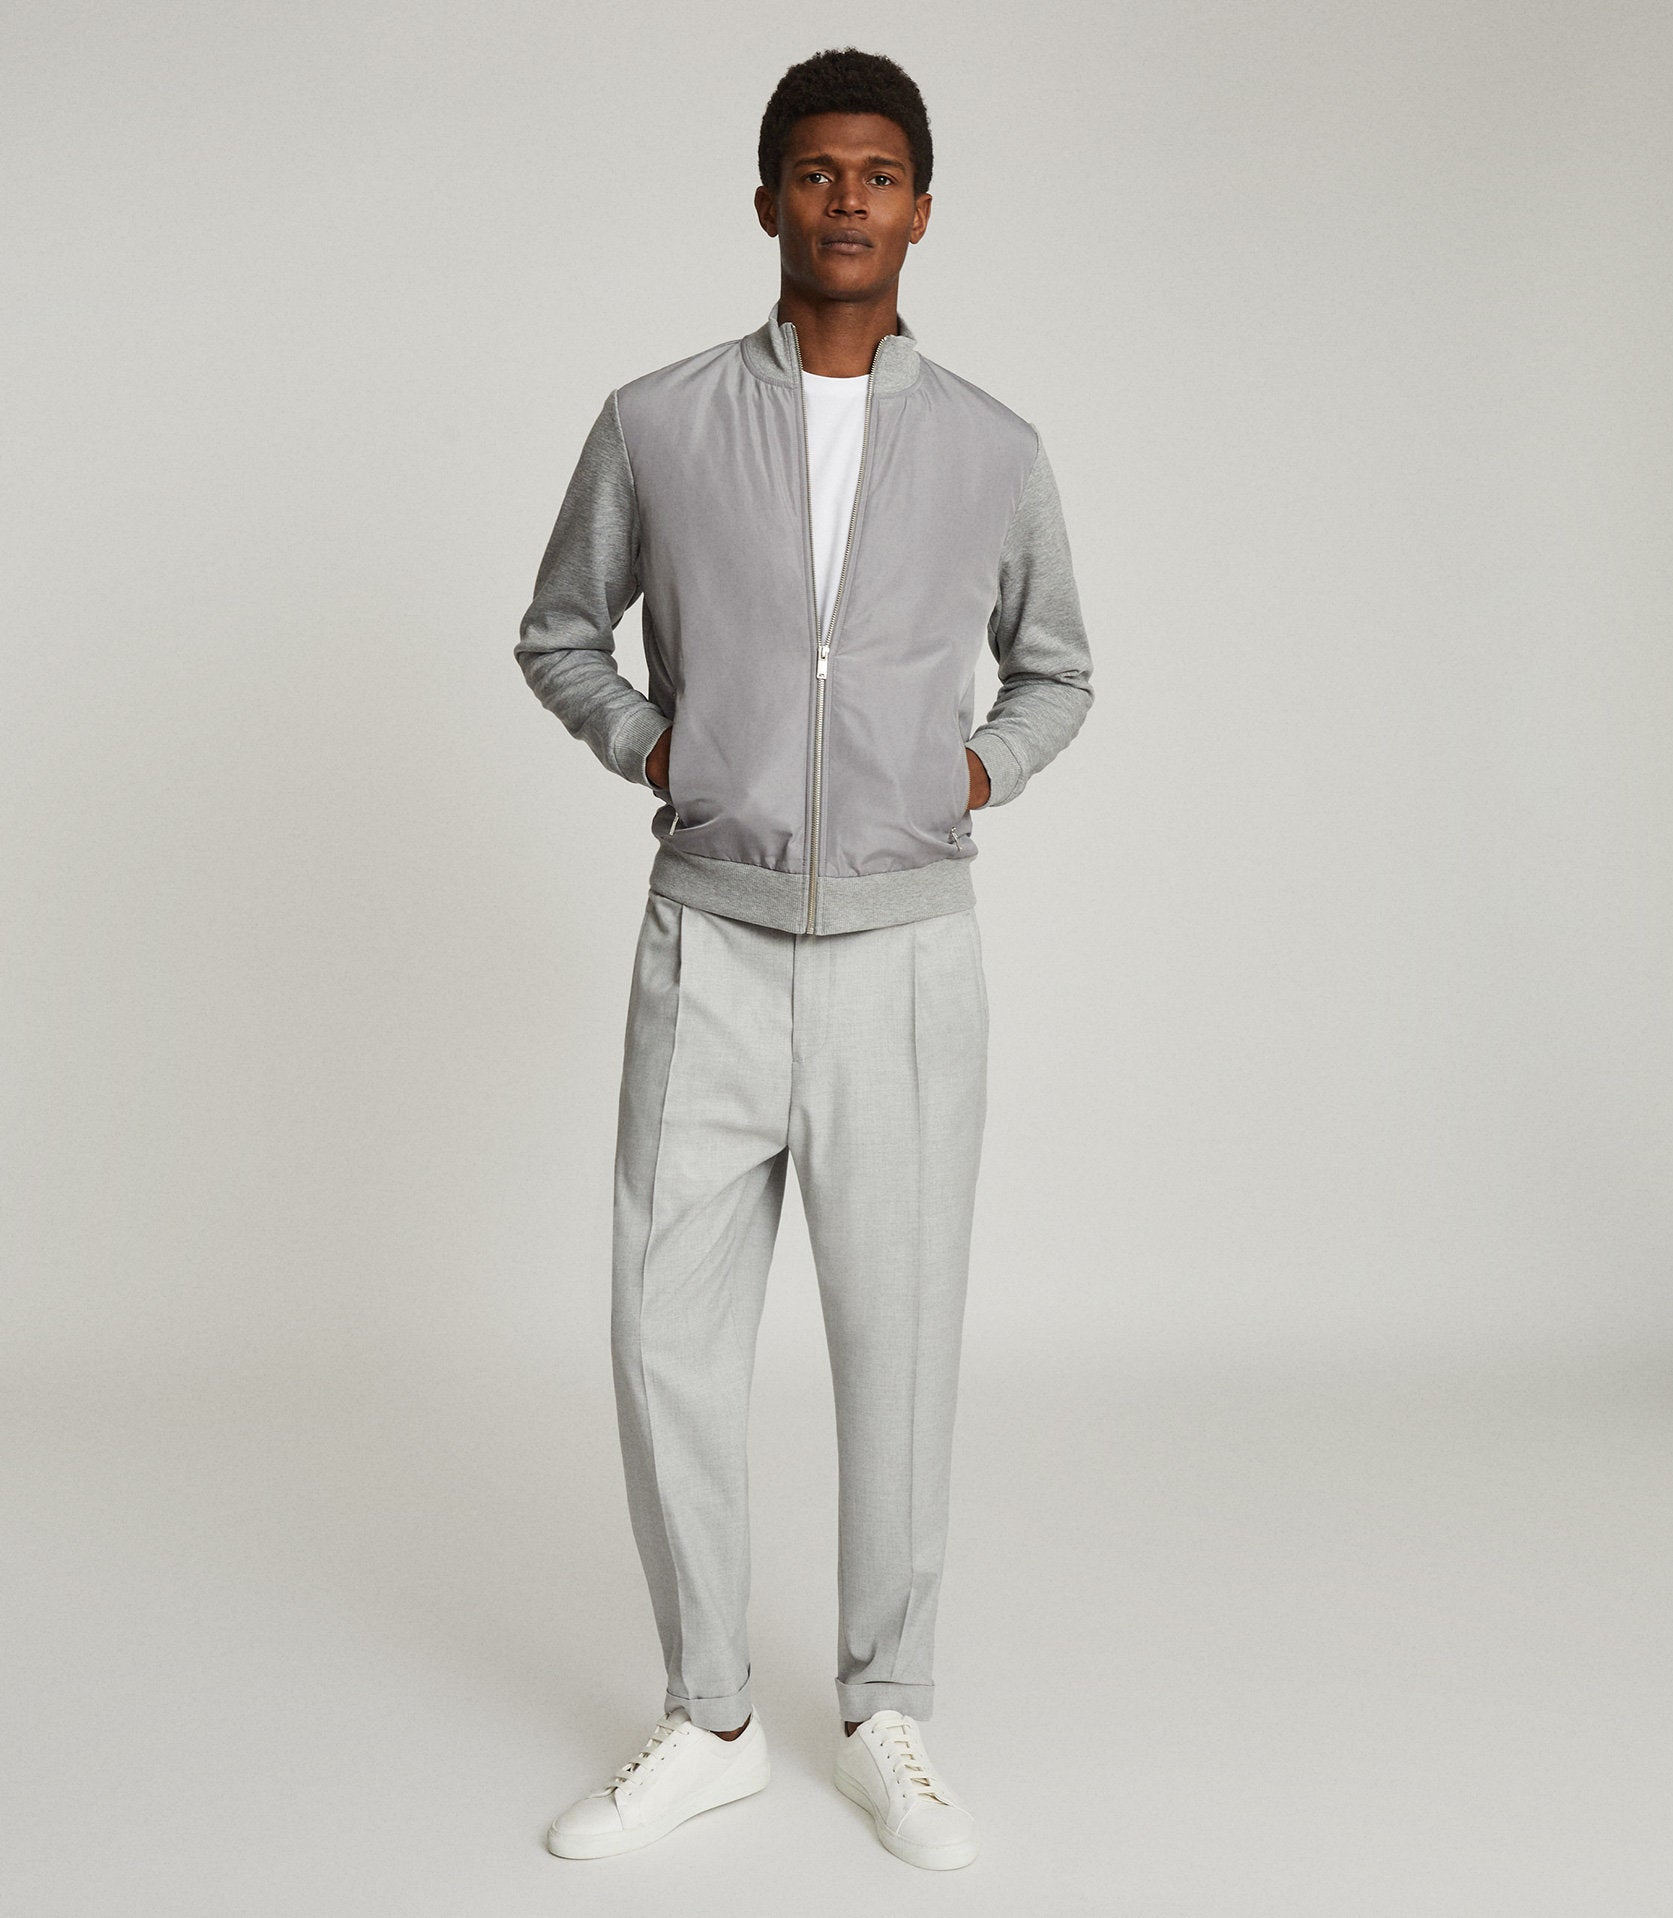 Reiss Steven - Hybrid Zip Through Jacket in Soft Grey, Mens, Size